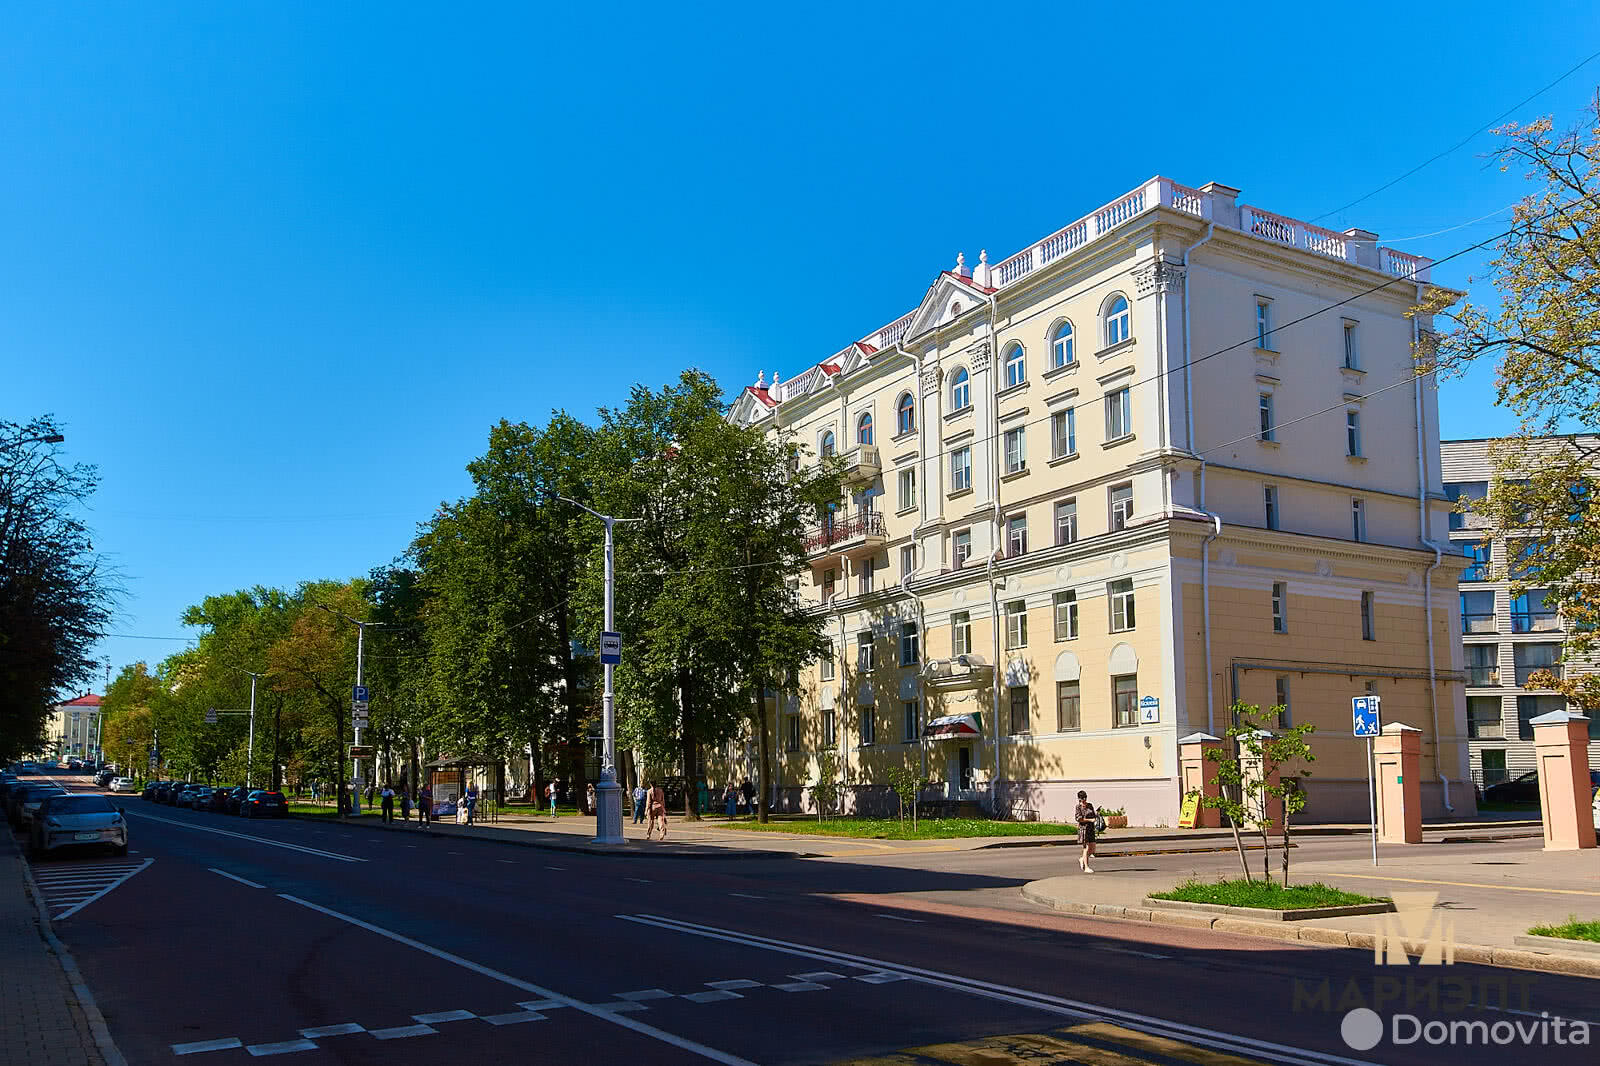 квартира, Минск, ул. Киселева, д. 4, стоимость аренды 2 955 р./мес.